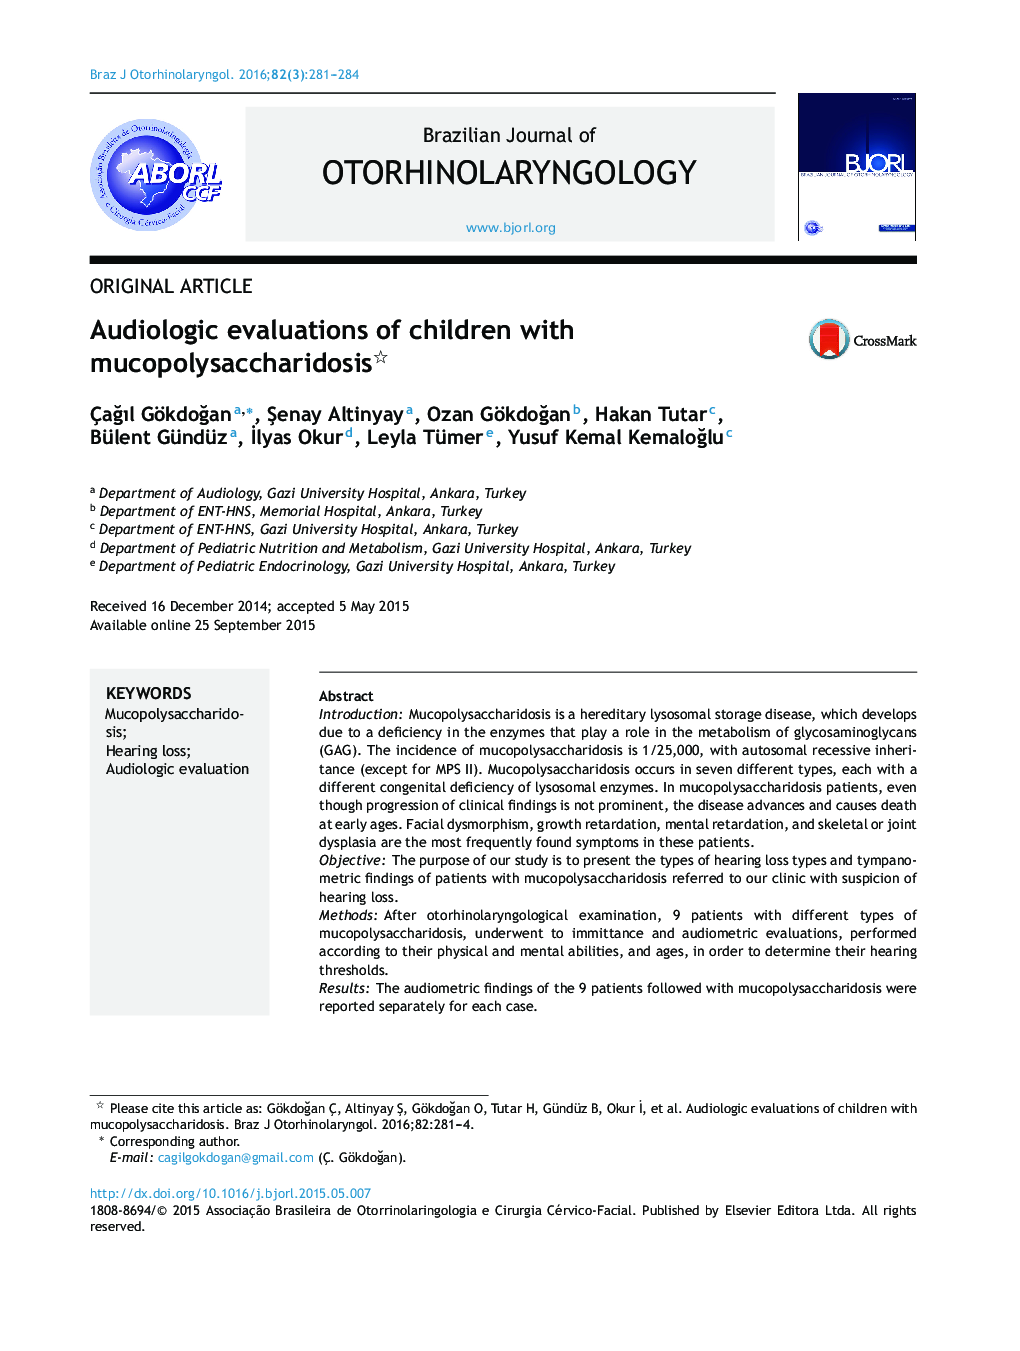 ارزیابی آئودیولوژیک کودکان مبتلا به موکوپلیساکاریدوز 